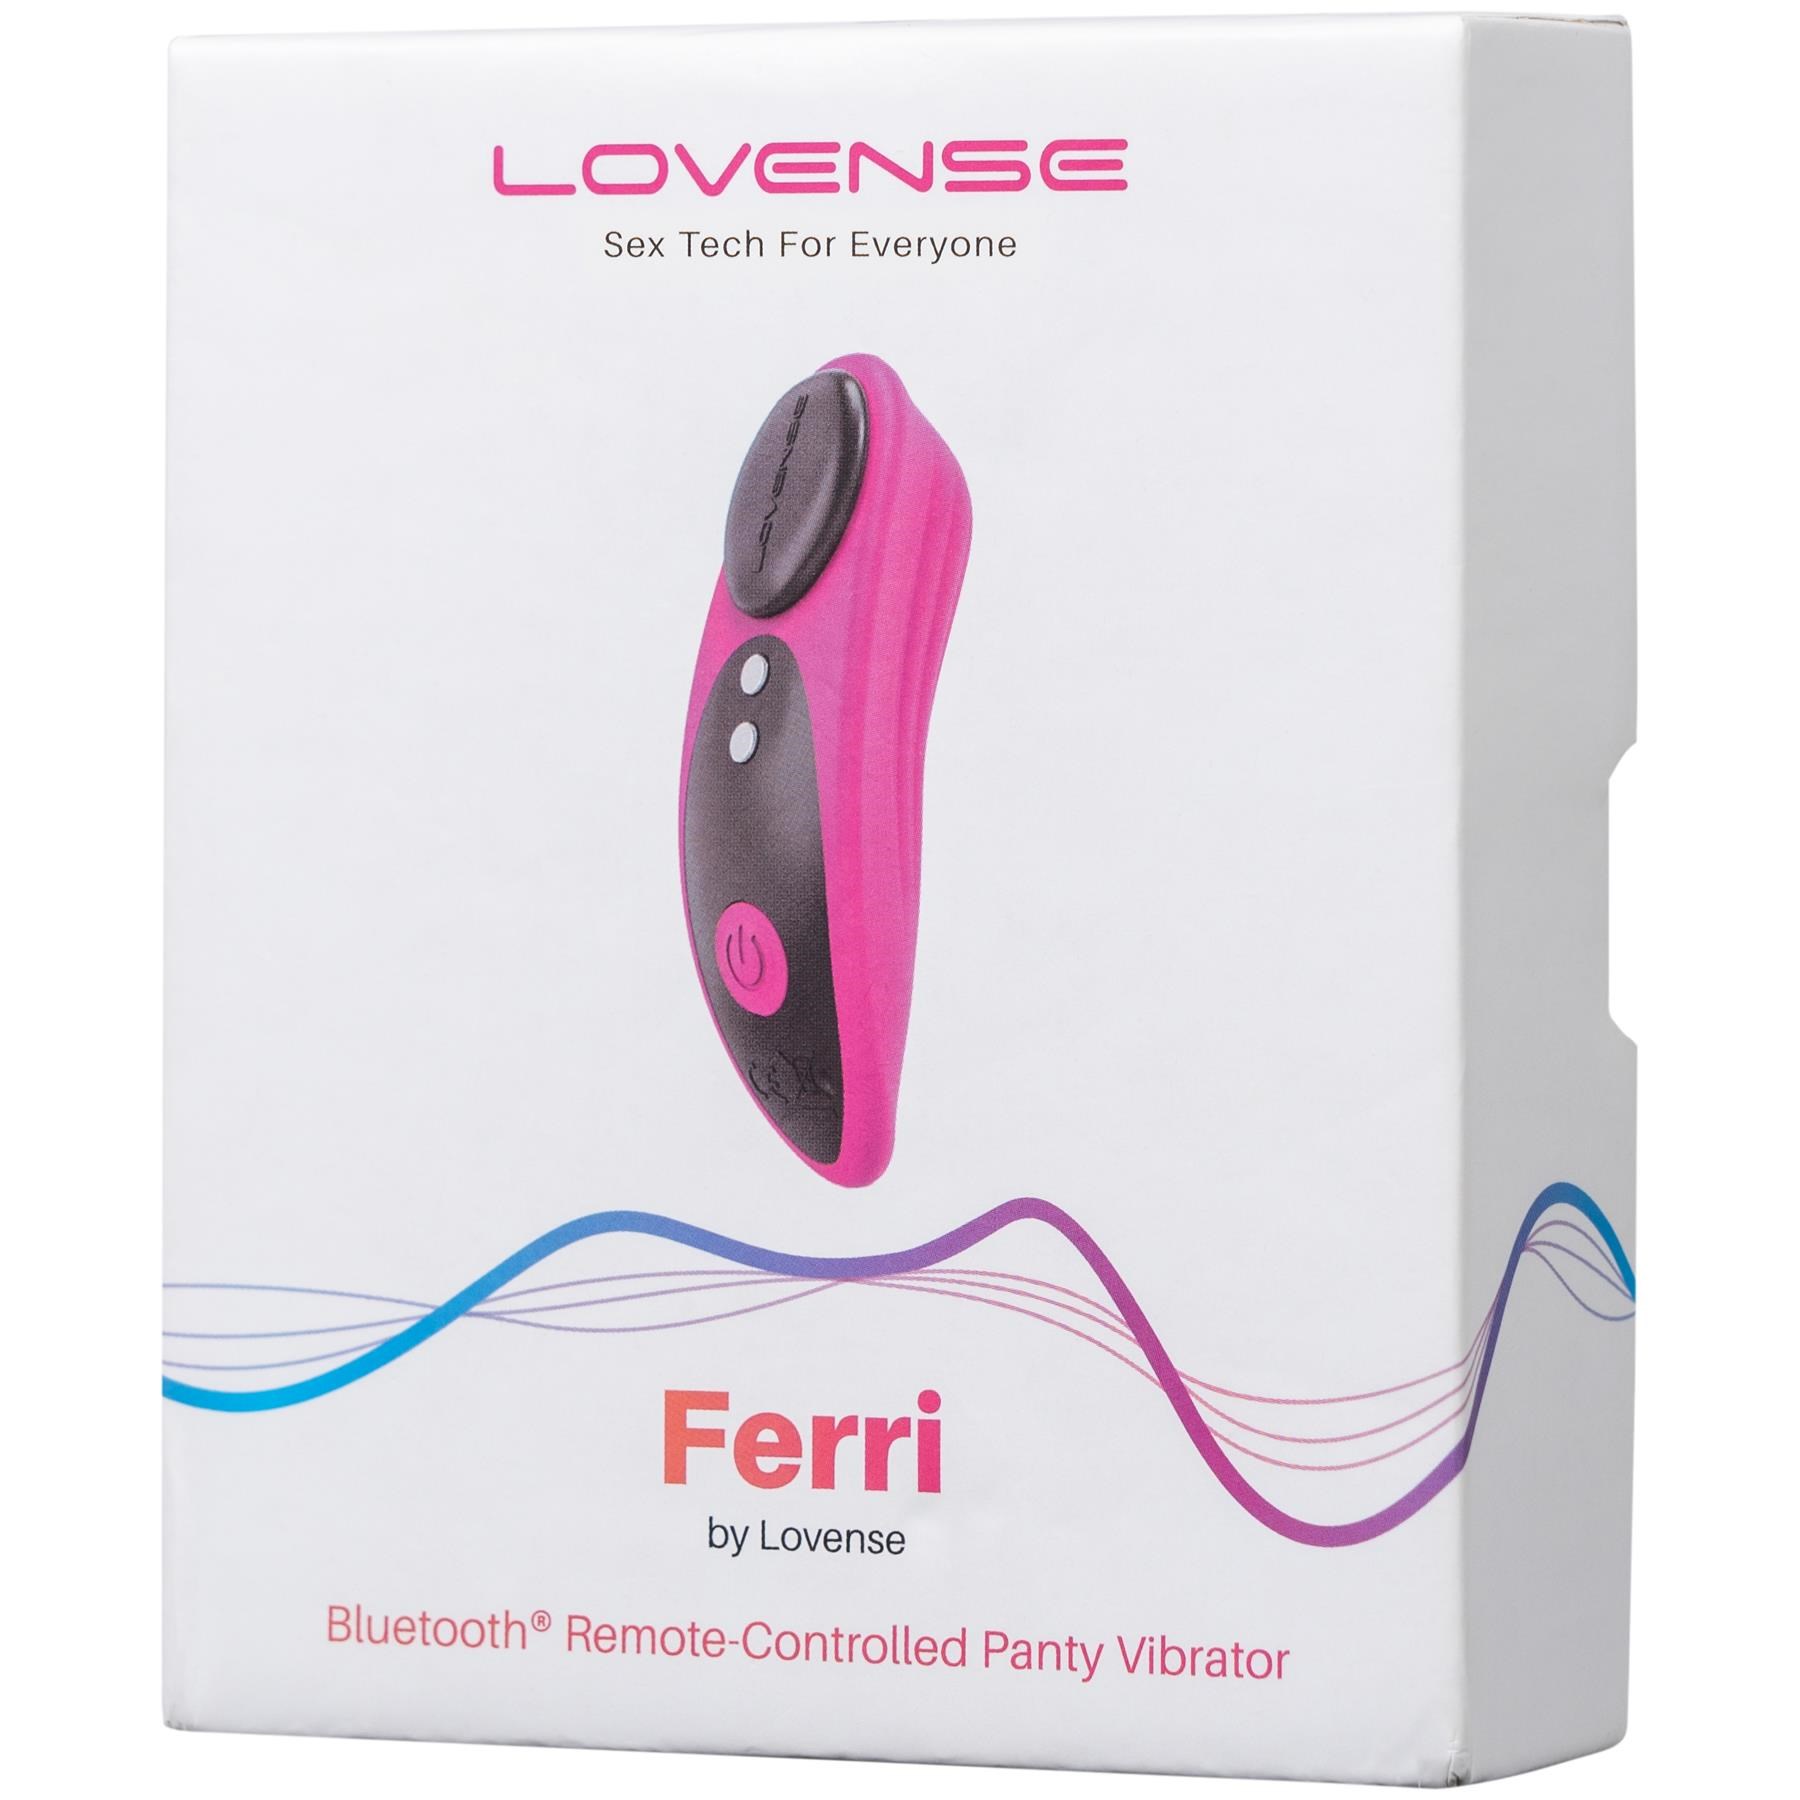 Lovense Ferri Bluetooth Panty Vibrator - Packaging